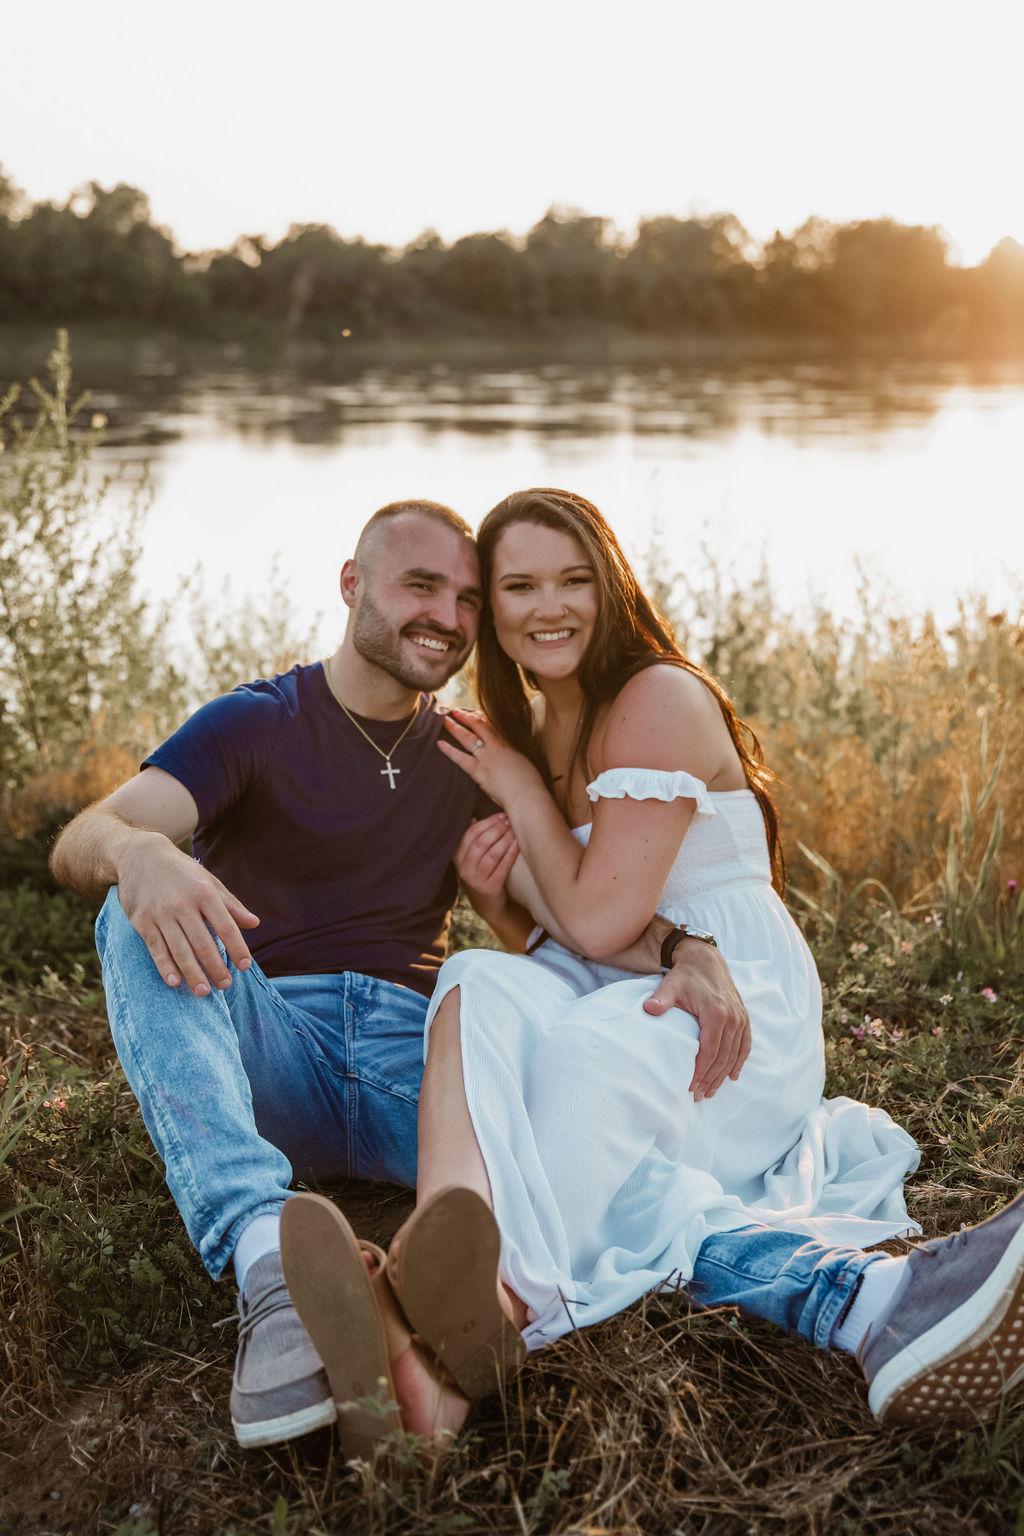 The Wedding Website of Zach Bledsoe and Kylea Curnutt